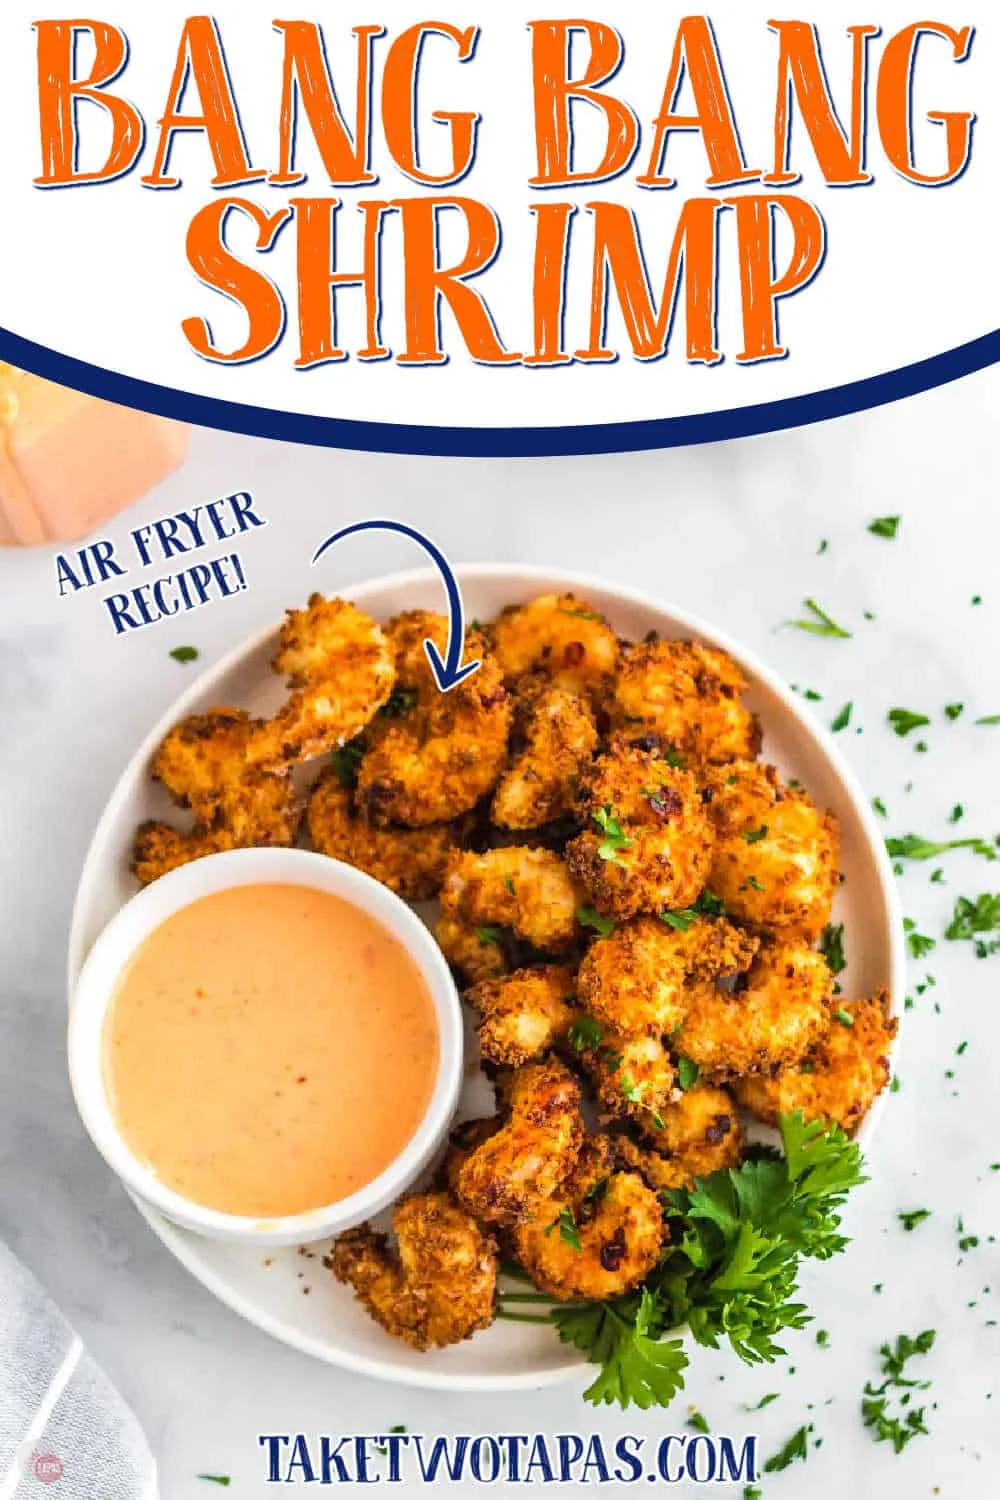 plate of shrimp with text "bang bang shrimp air fryer recipe"